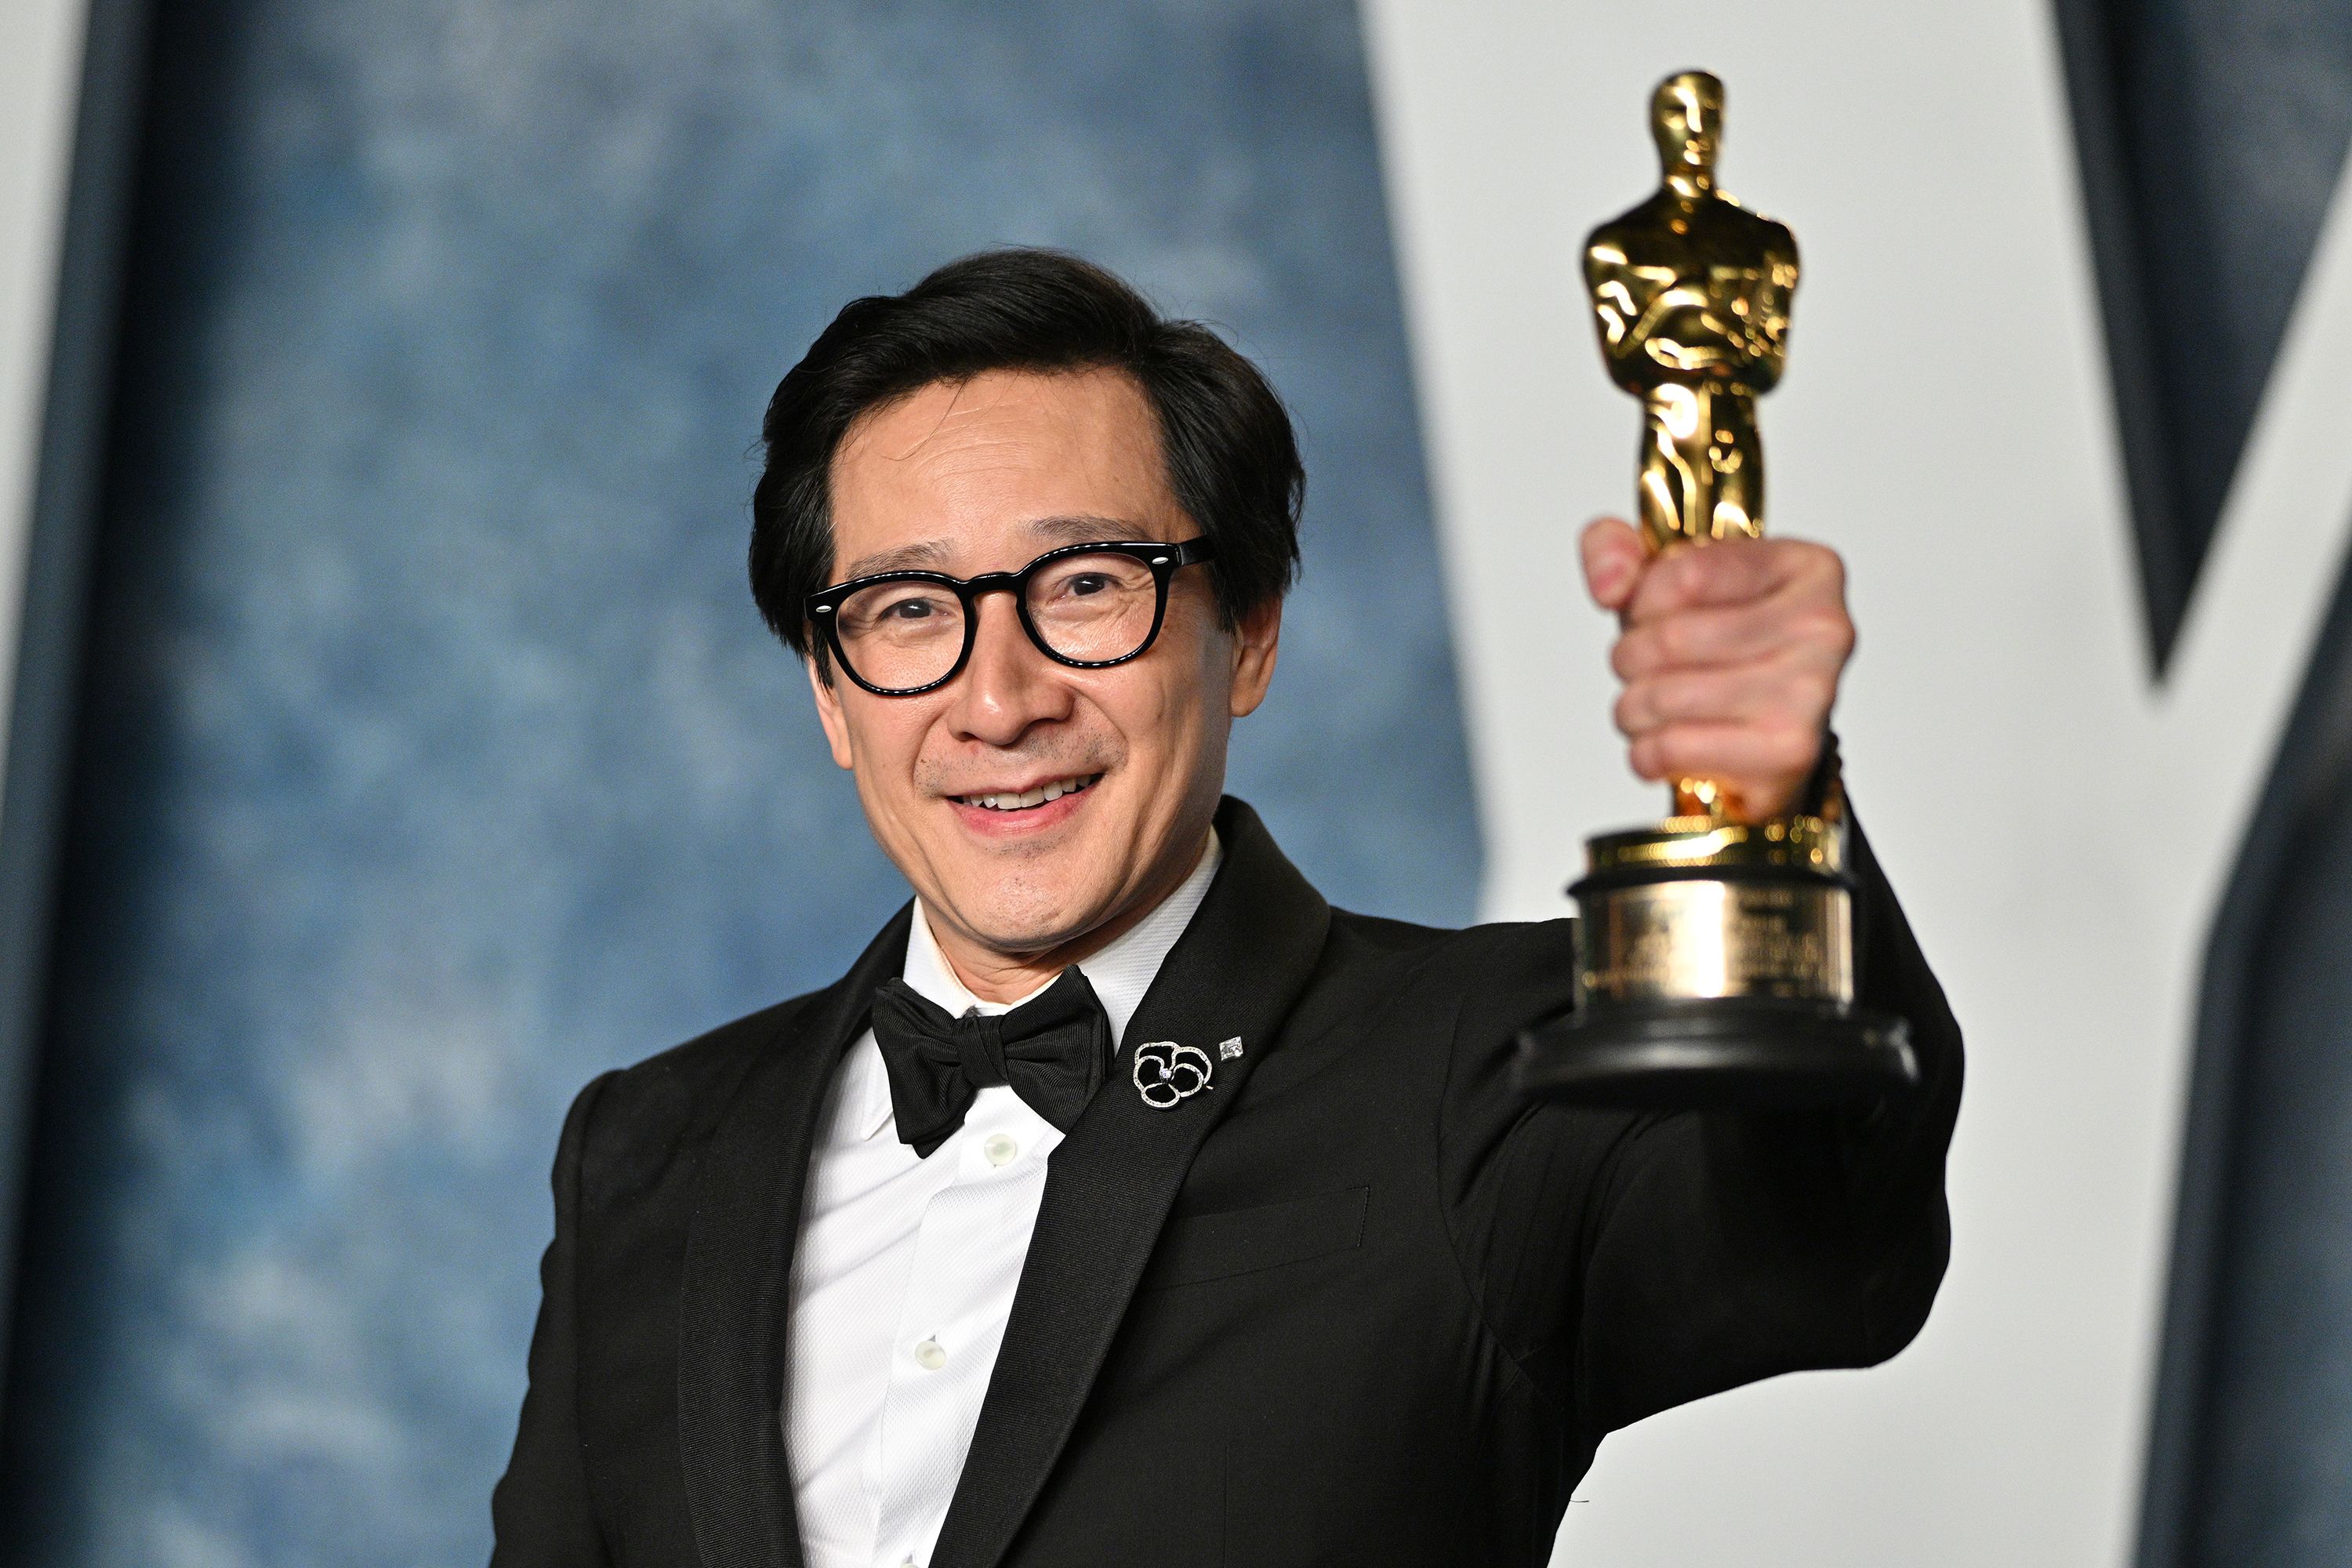 Ke Huy Quan shares the advice Cate Blanchett gave him on next steps post-Oscar | CNN